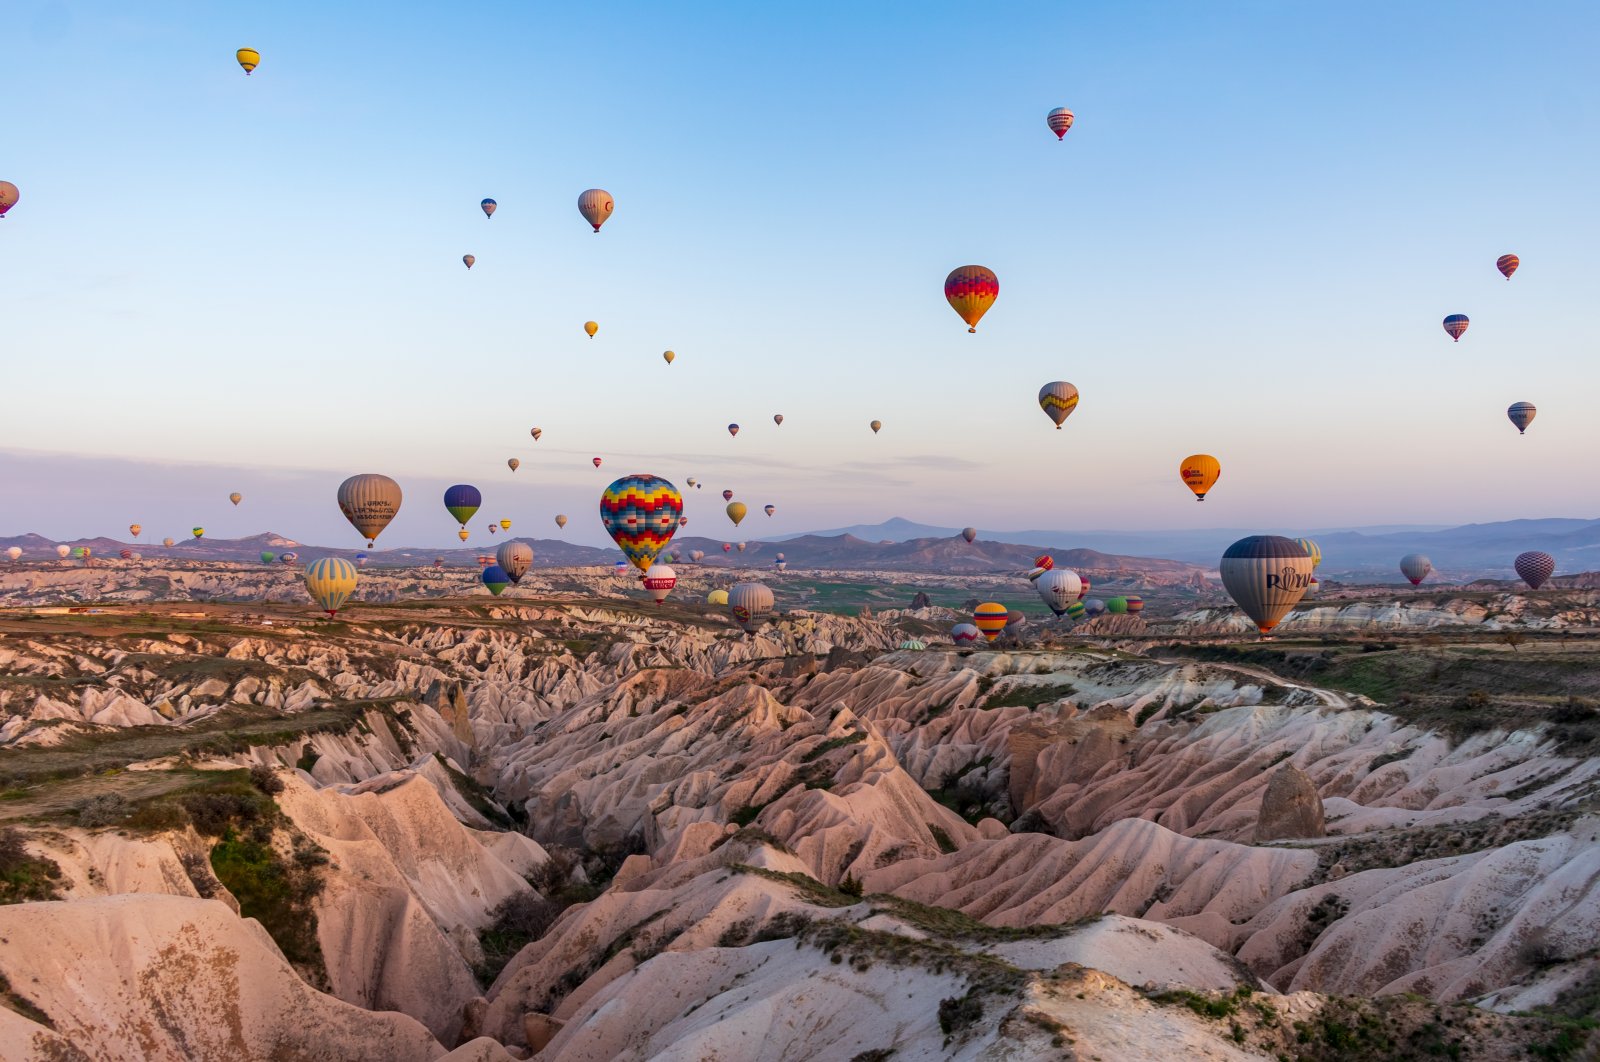 Hot air balloons dot the sky in Cappadocia, Turkey. (Shutterstock Photo)